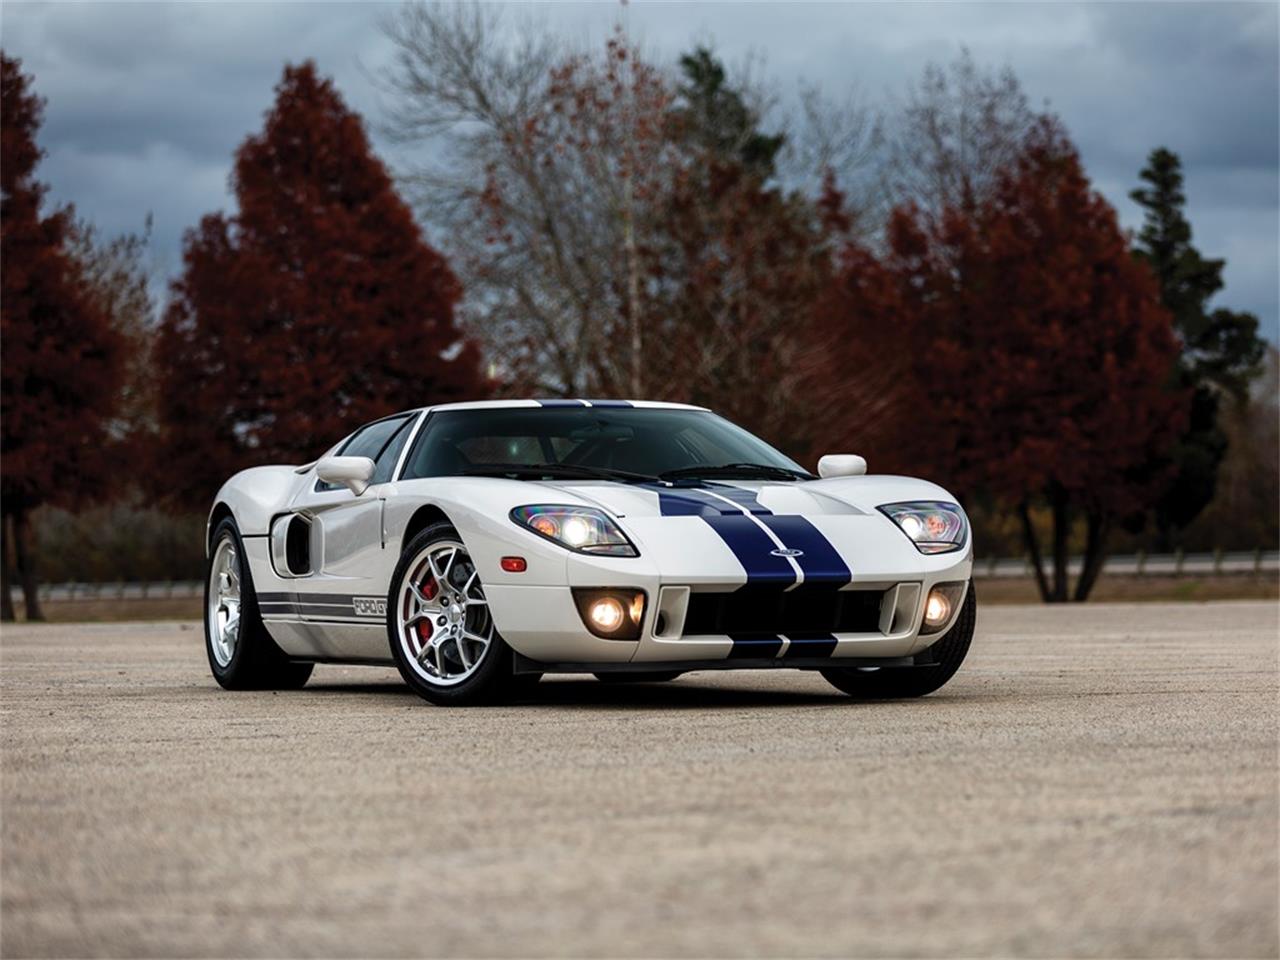 L/F Le Mans Stripes - Wanted! - Model Cars Magazine Forum